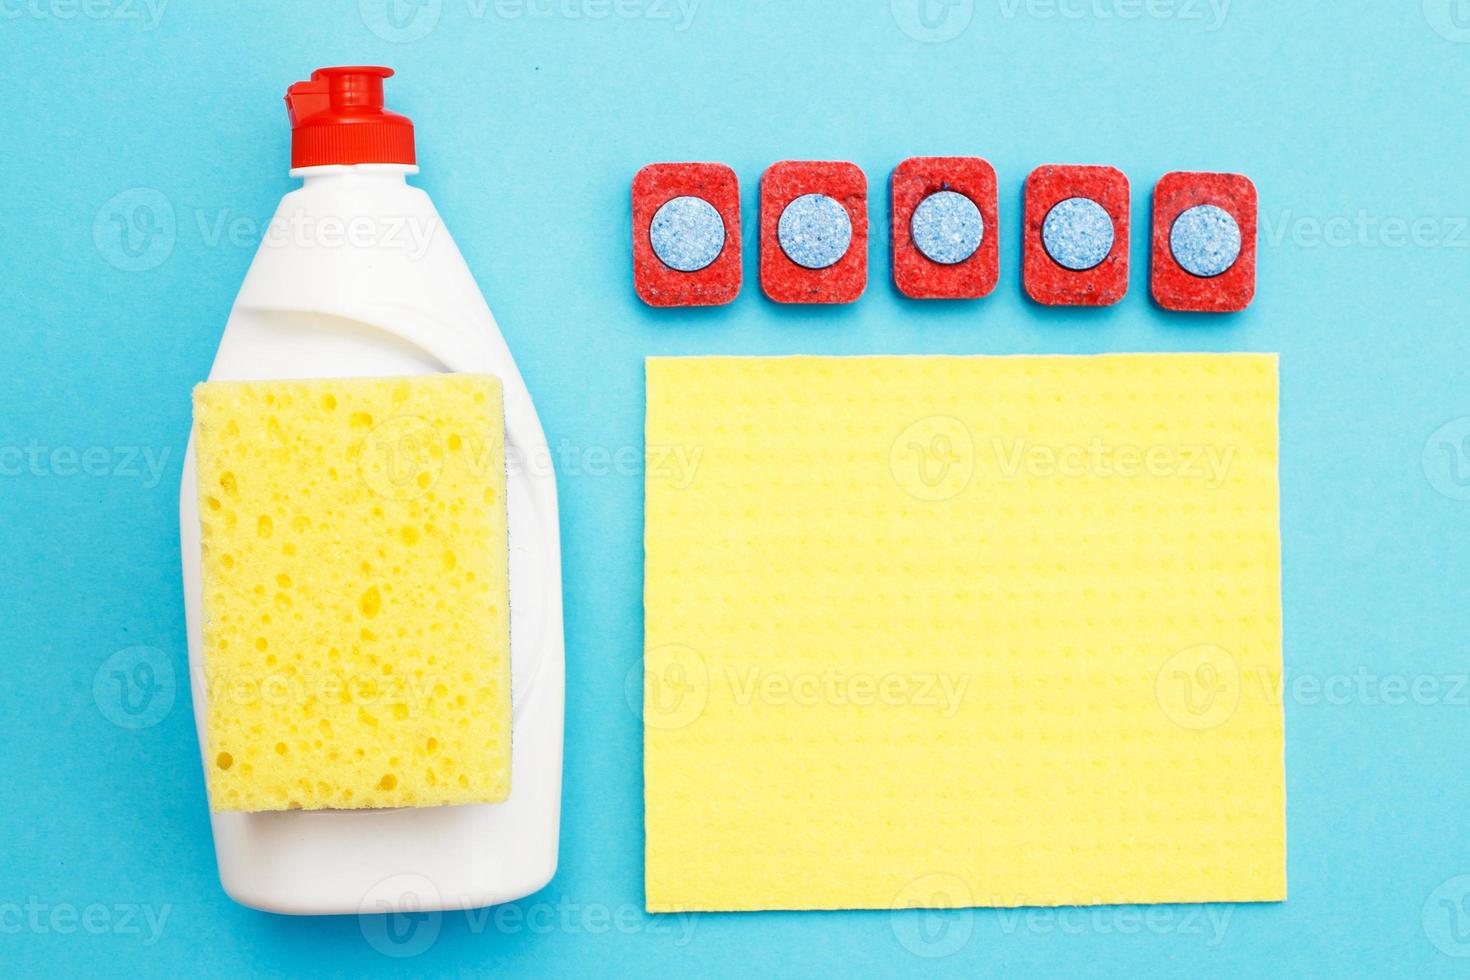 capsules for dishwashers, dishwashing detergents liquid, kitchen rag and sponges on a blue background. photo